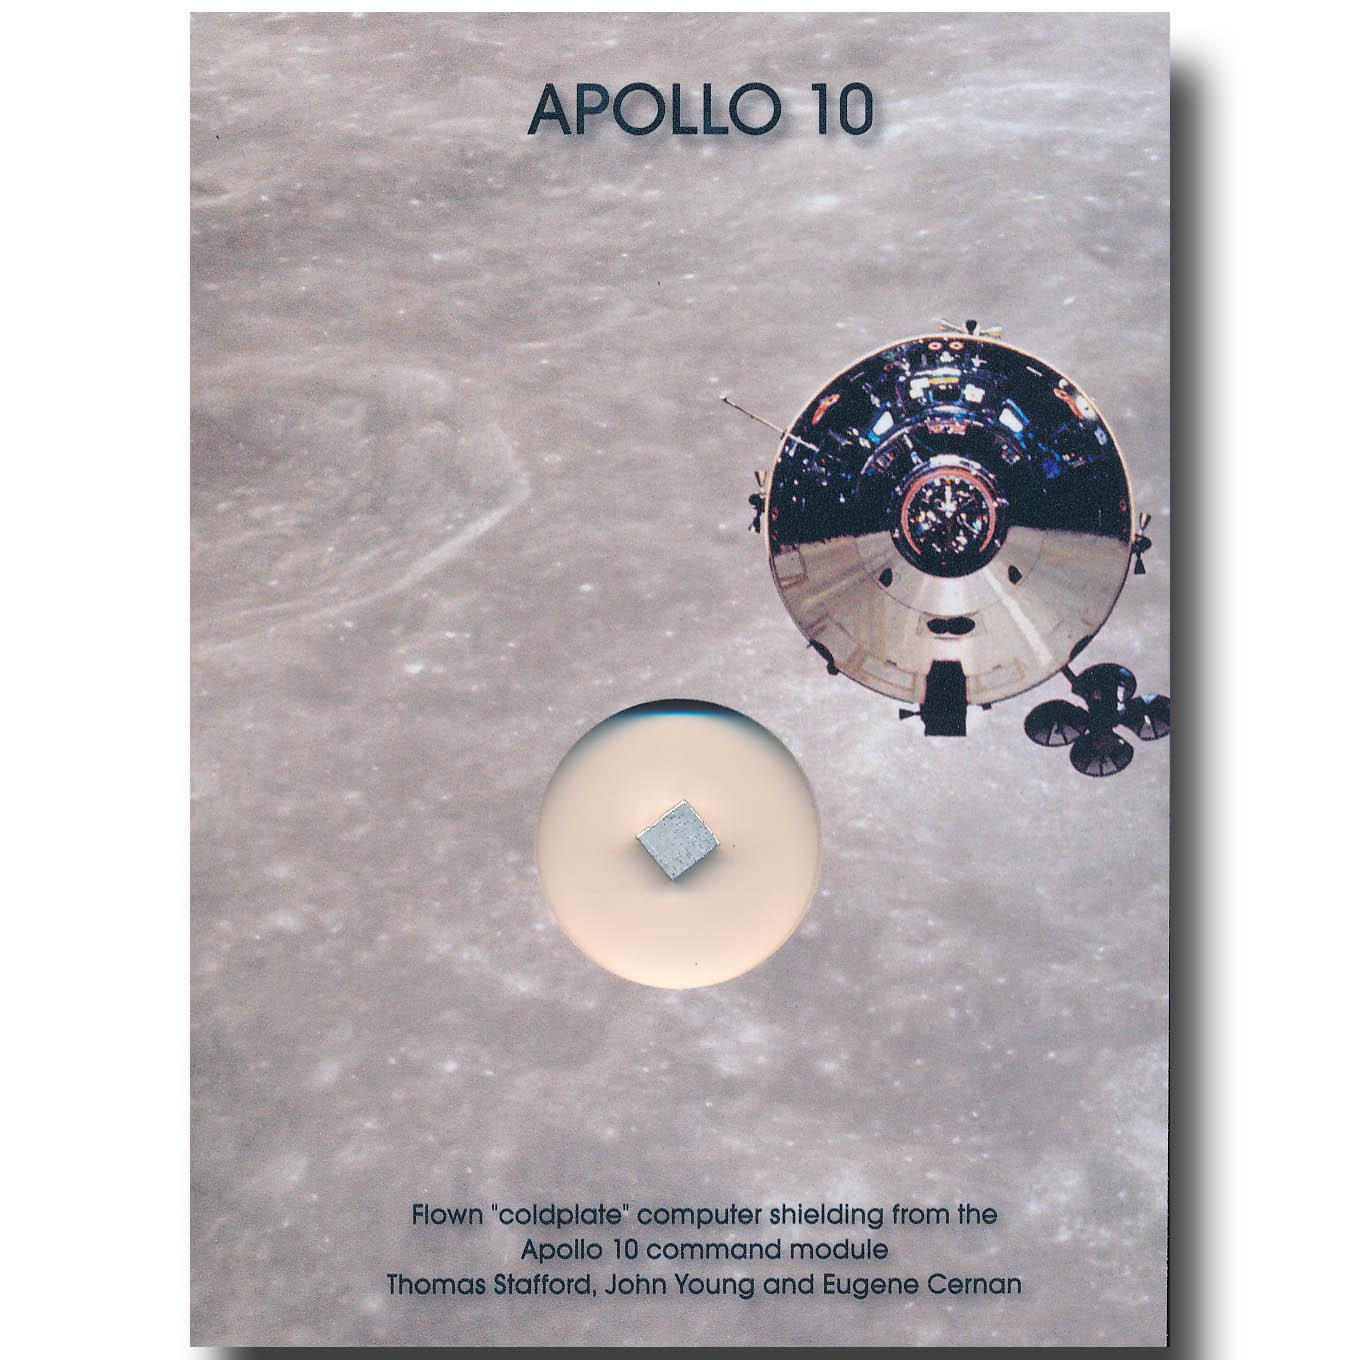 Apollo 10 moon flown coldplate insulation